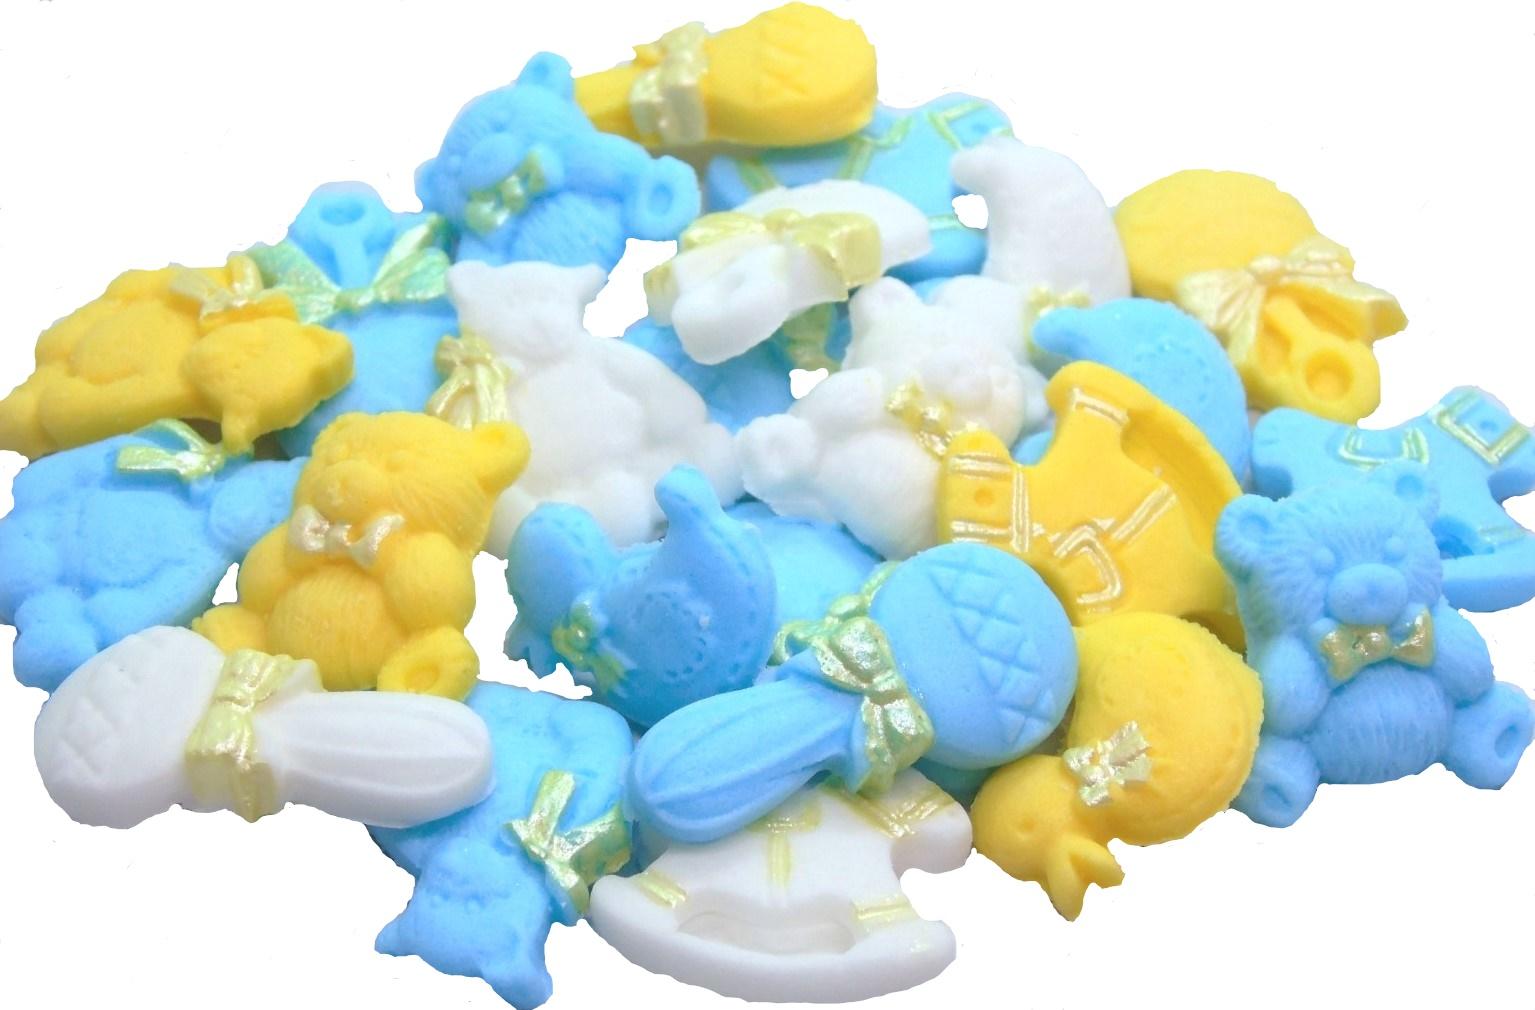 24 Vegan Blue Mix Assorted Items Baby Shower Cupcake Cake Decorations